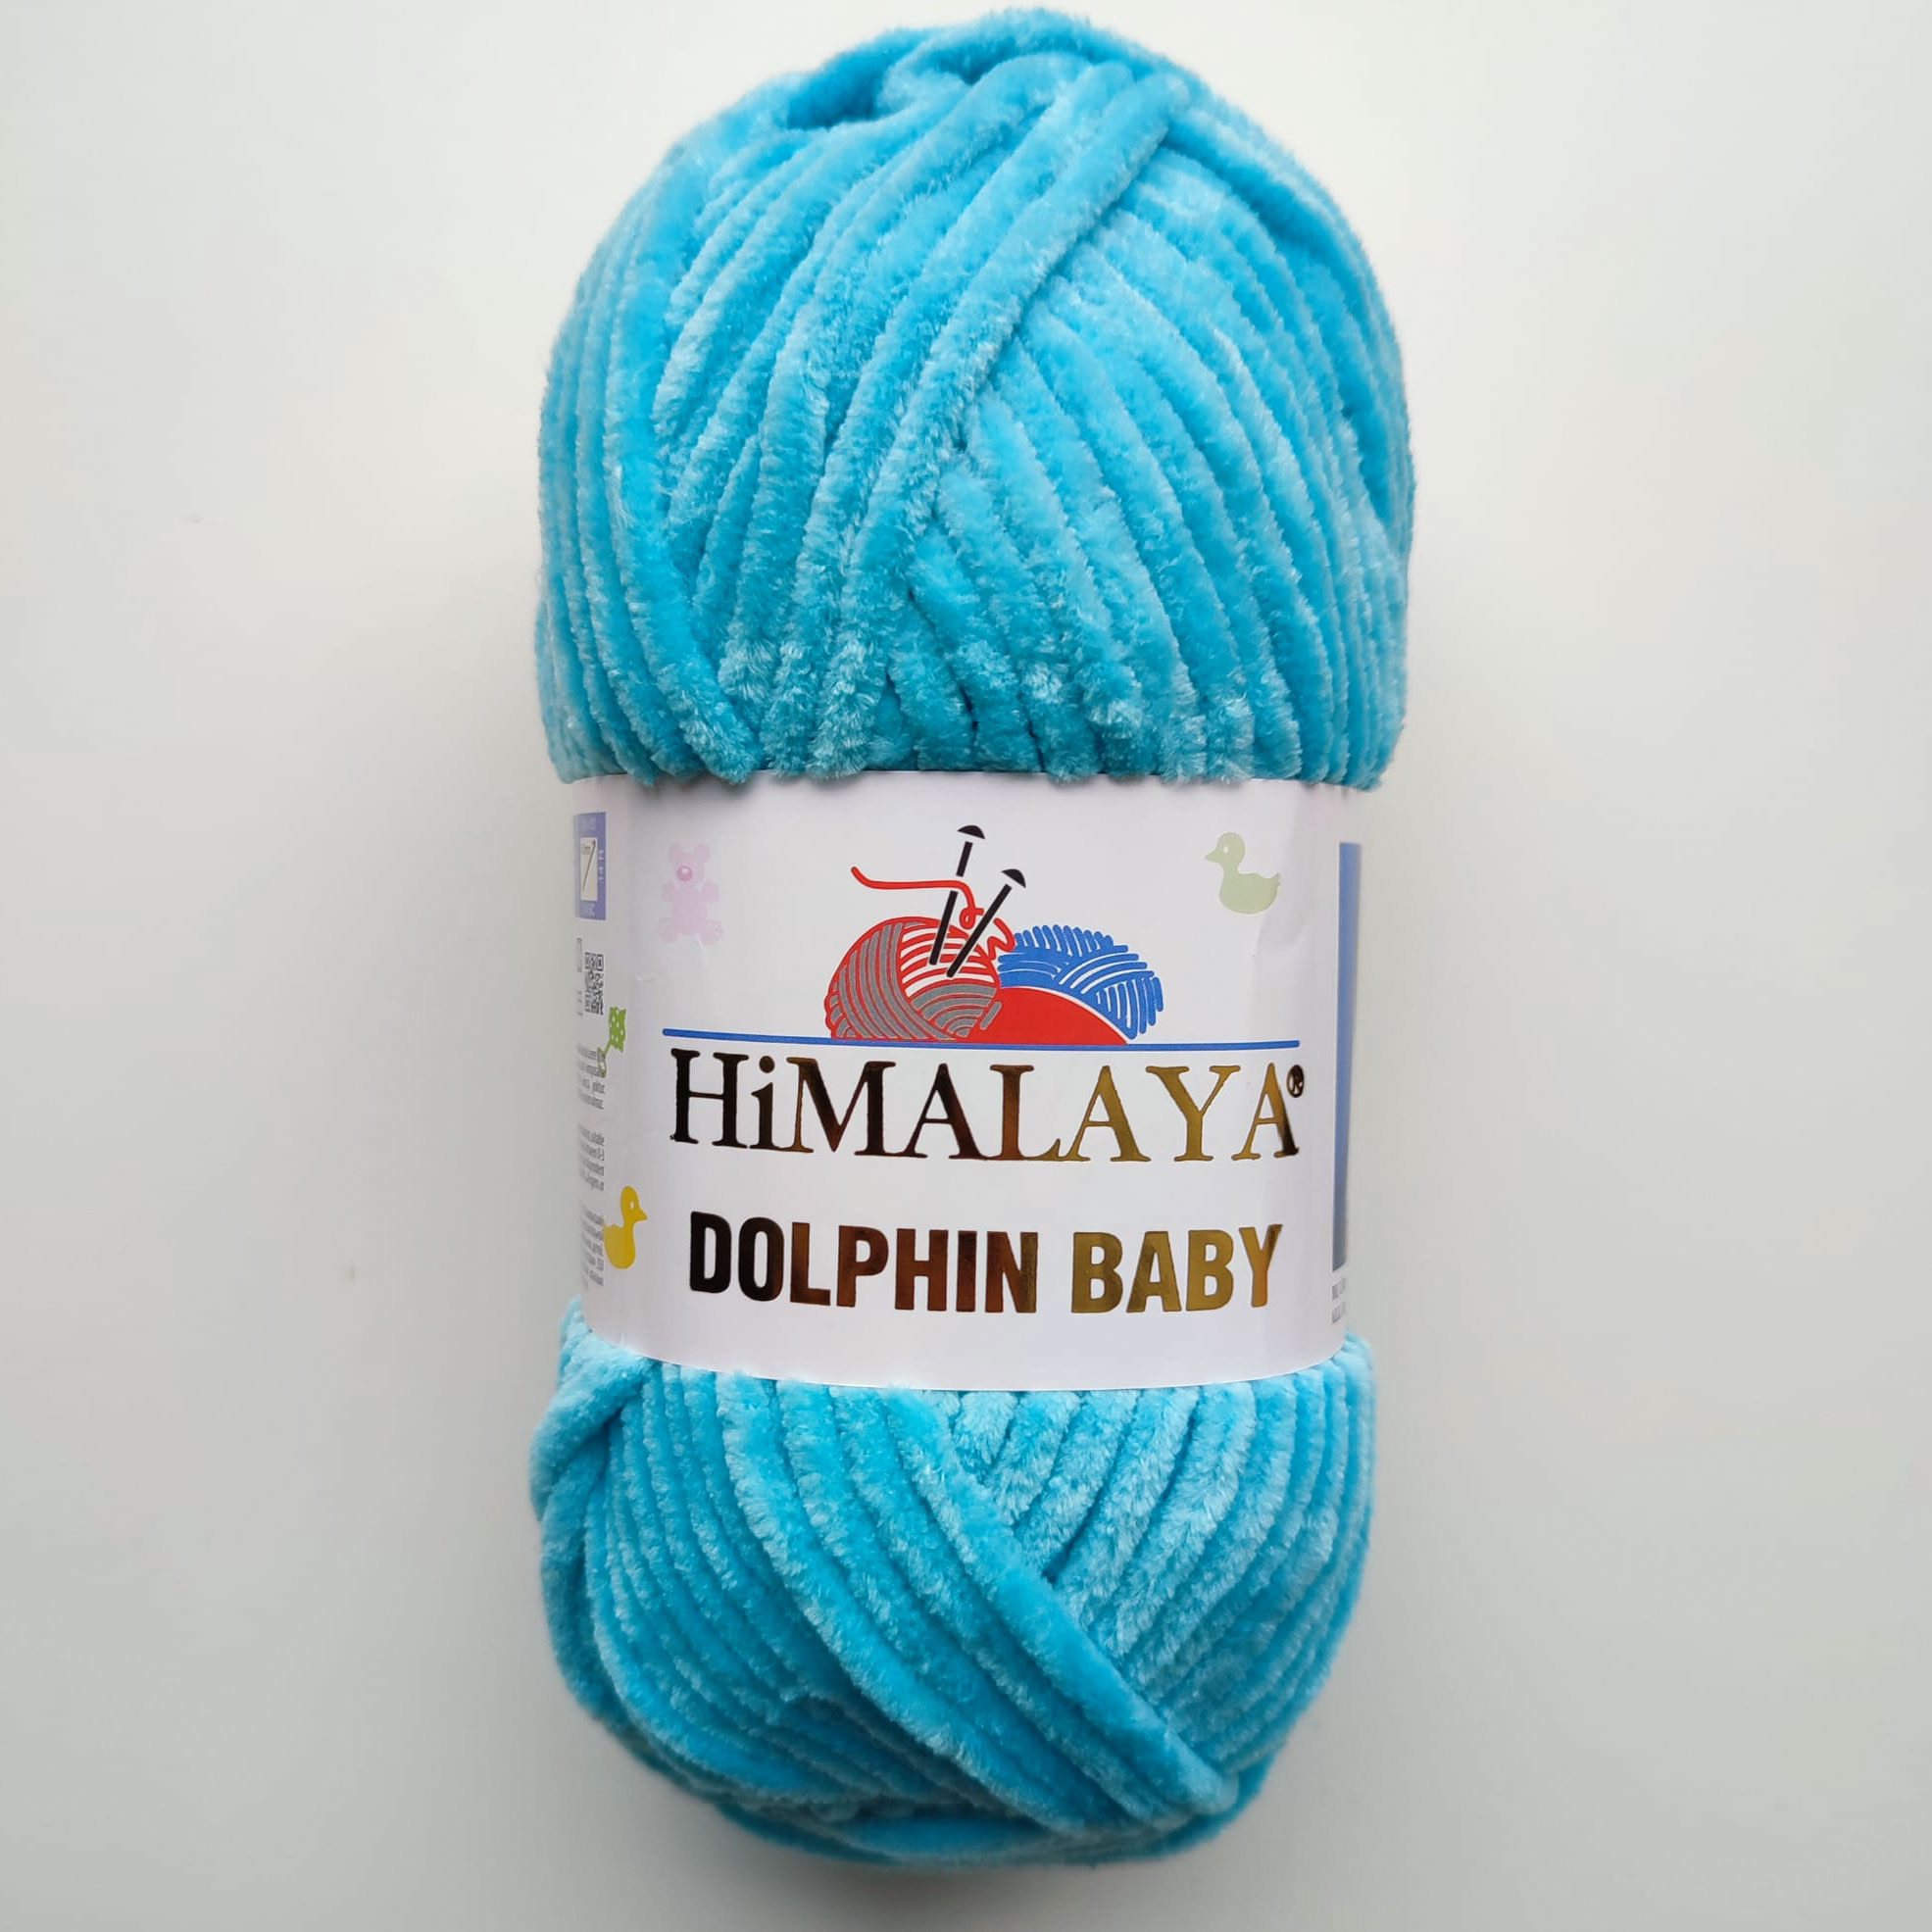 Himalaya Dolphin Baby Chenille Yarn, Blue - 80341